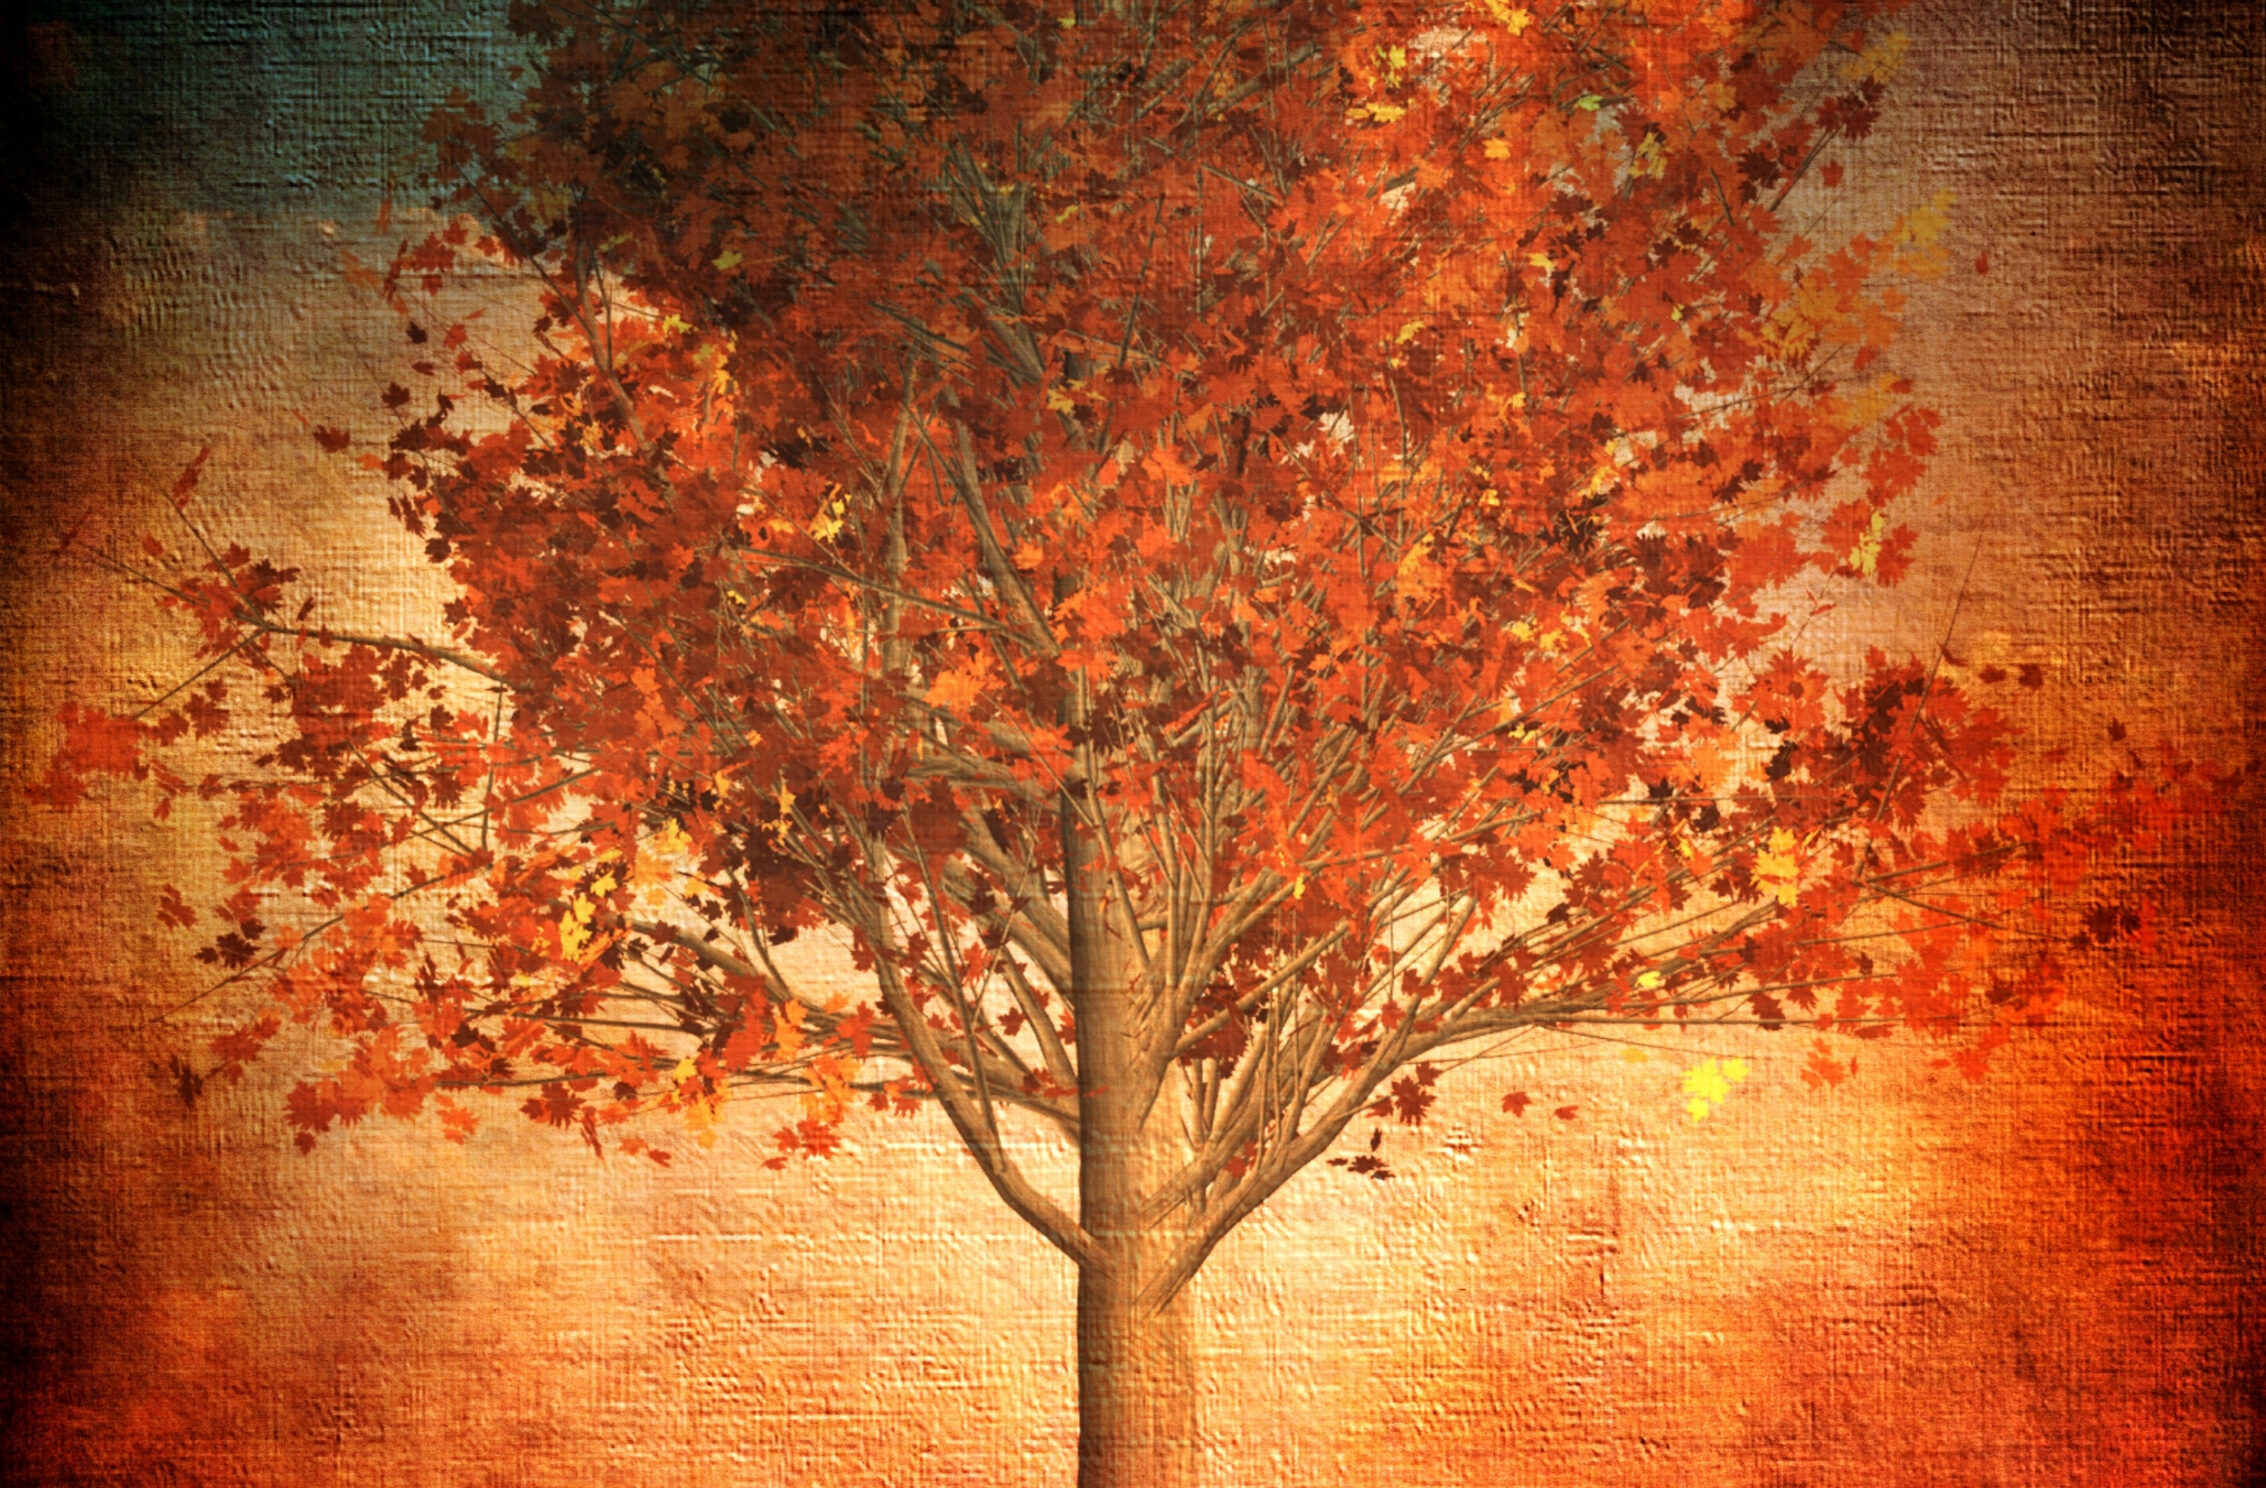 2266x1488 iPad Mini wallpapers Aesthetic Autumn Red Fall Leaves Nature iPad Wallpaper 2266x1488 pixels resolution